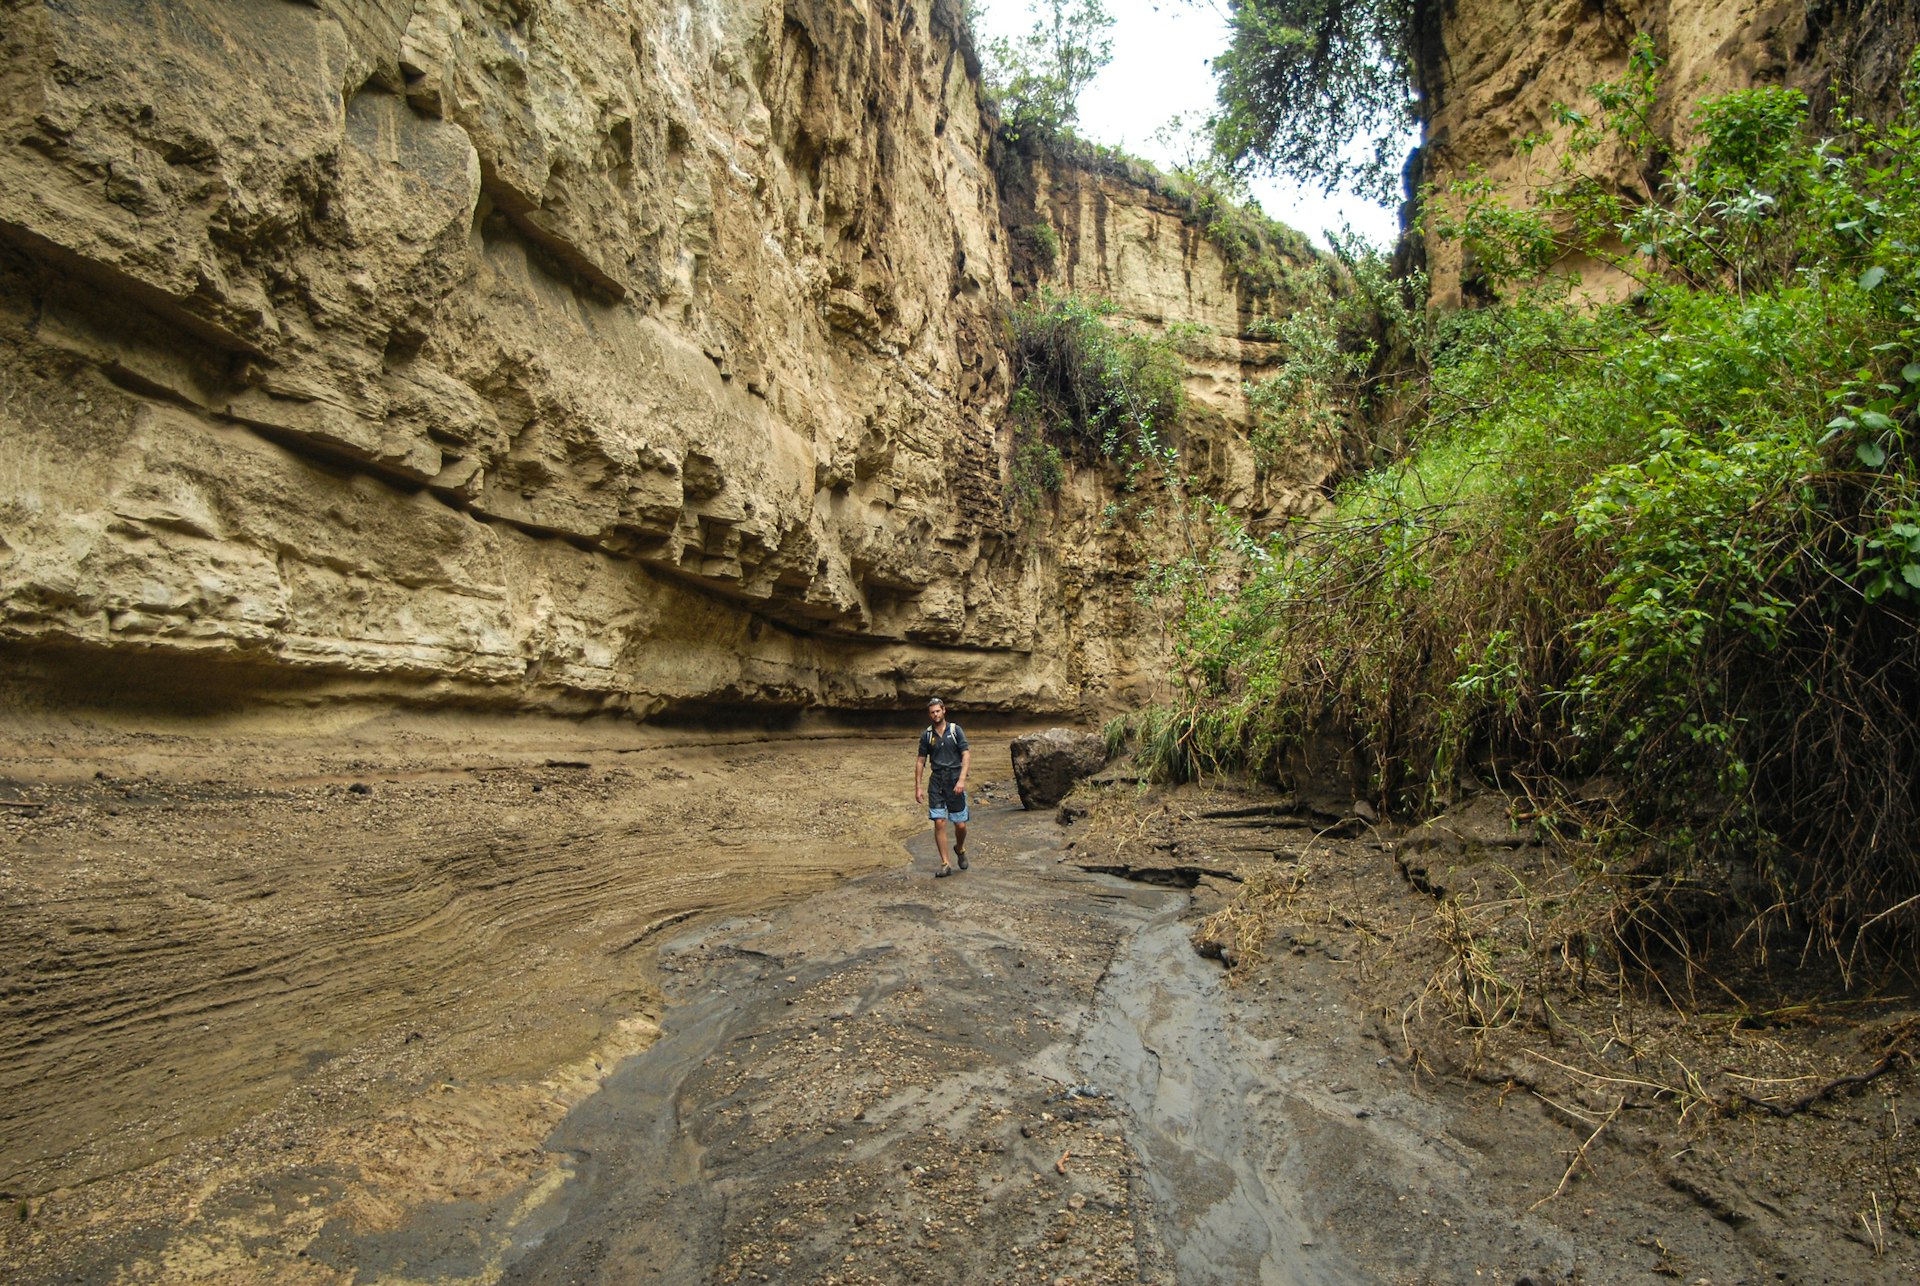 A man walks through a narrow pathway between sheer walls of volcanic rock in a national park